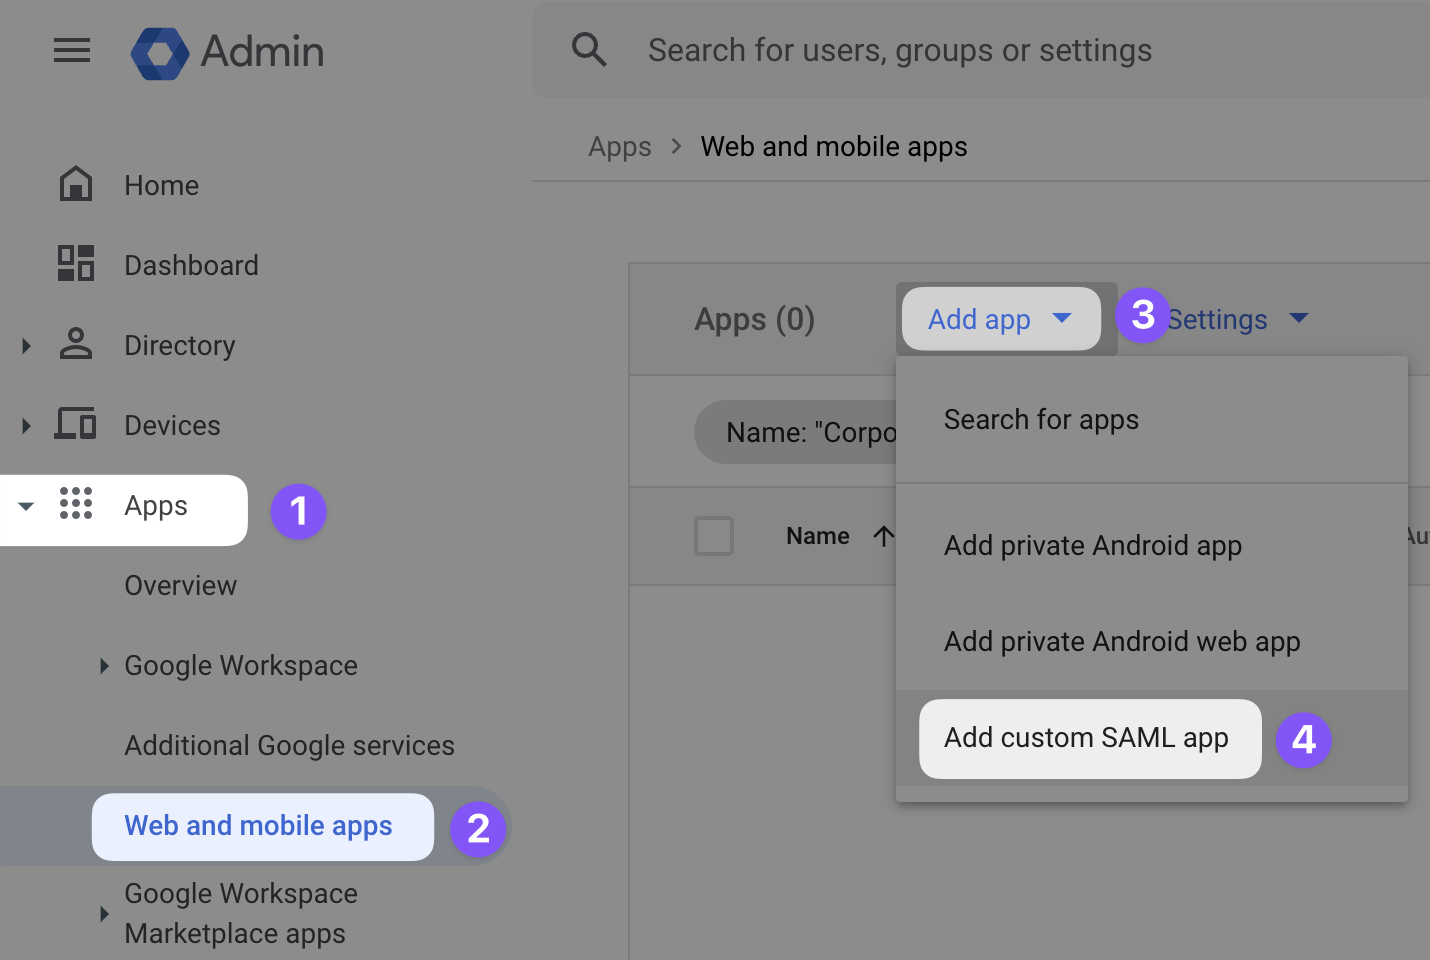 Navigate to add a custom SAML app